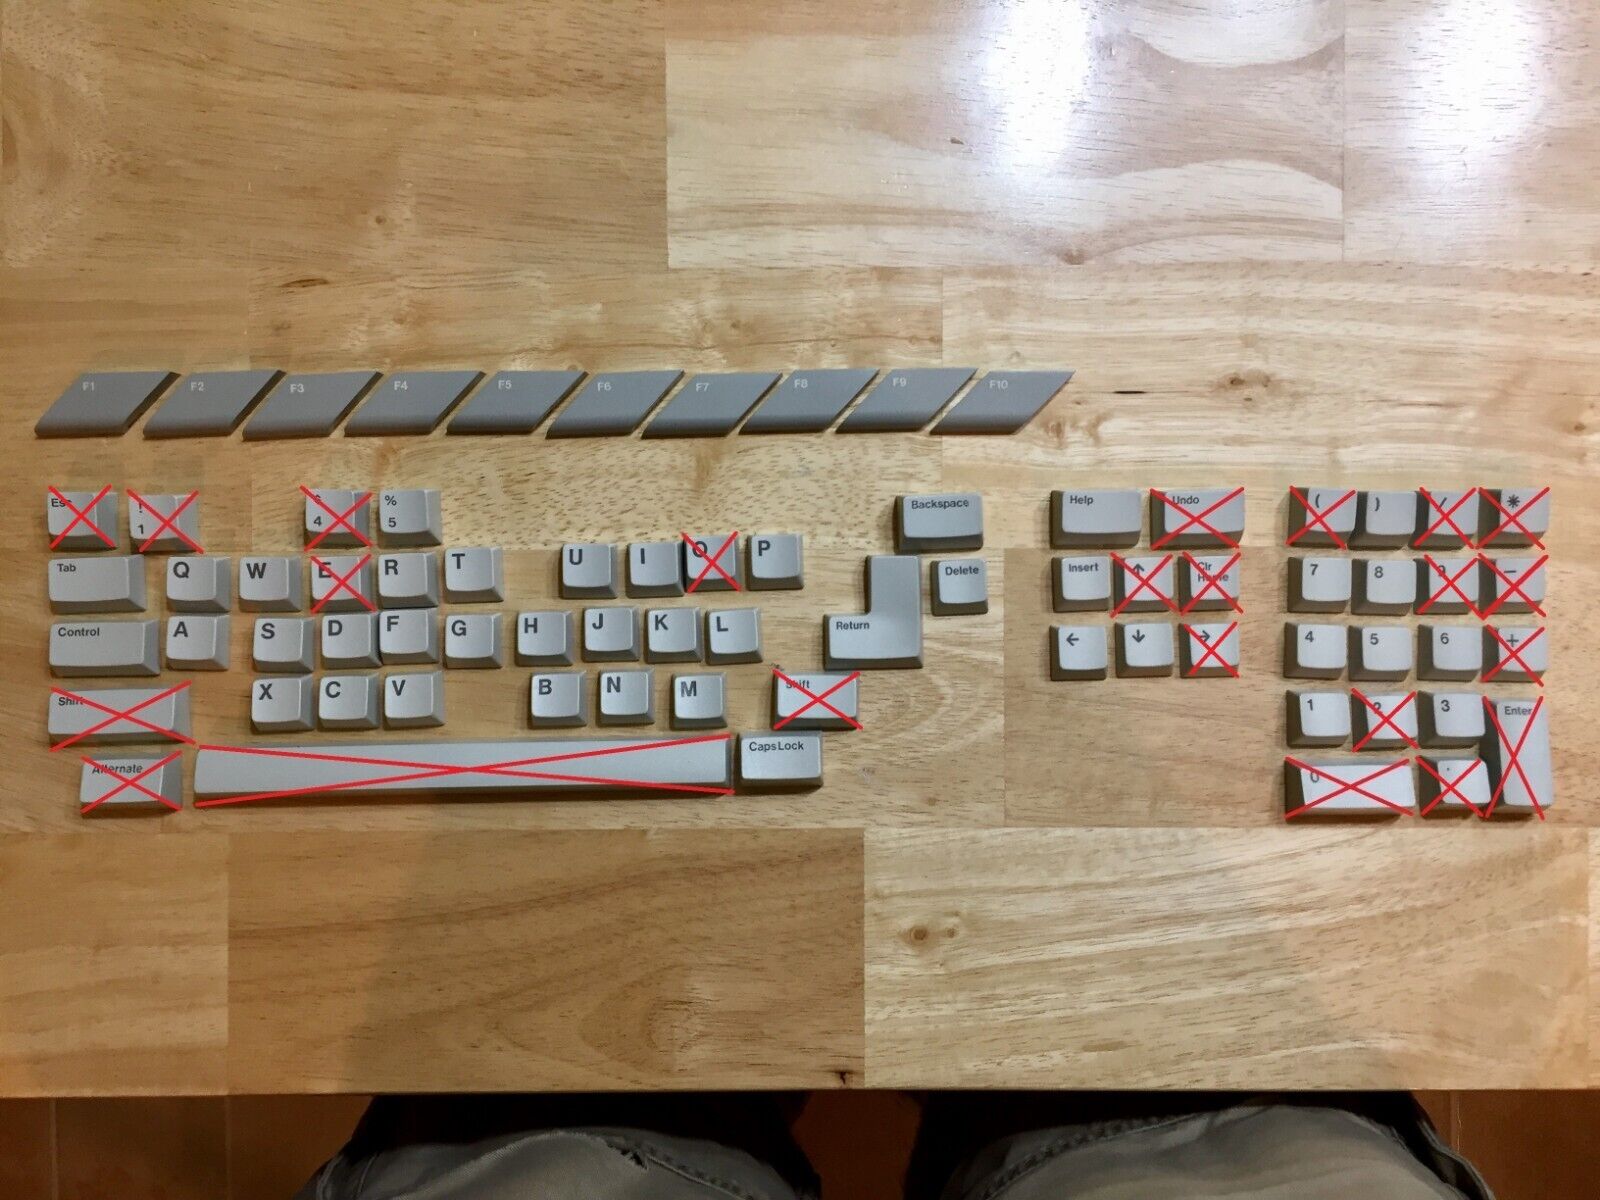 Atari Mega ST keyboard keys USA layout (NOT Whole Keyboard)